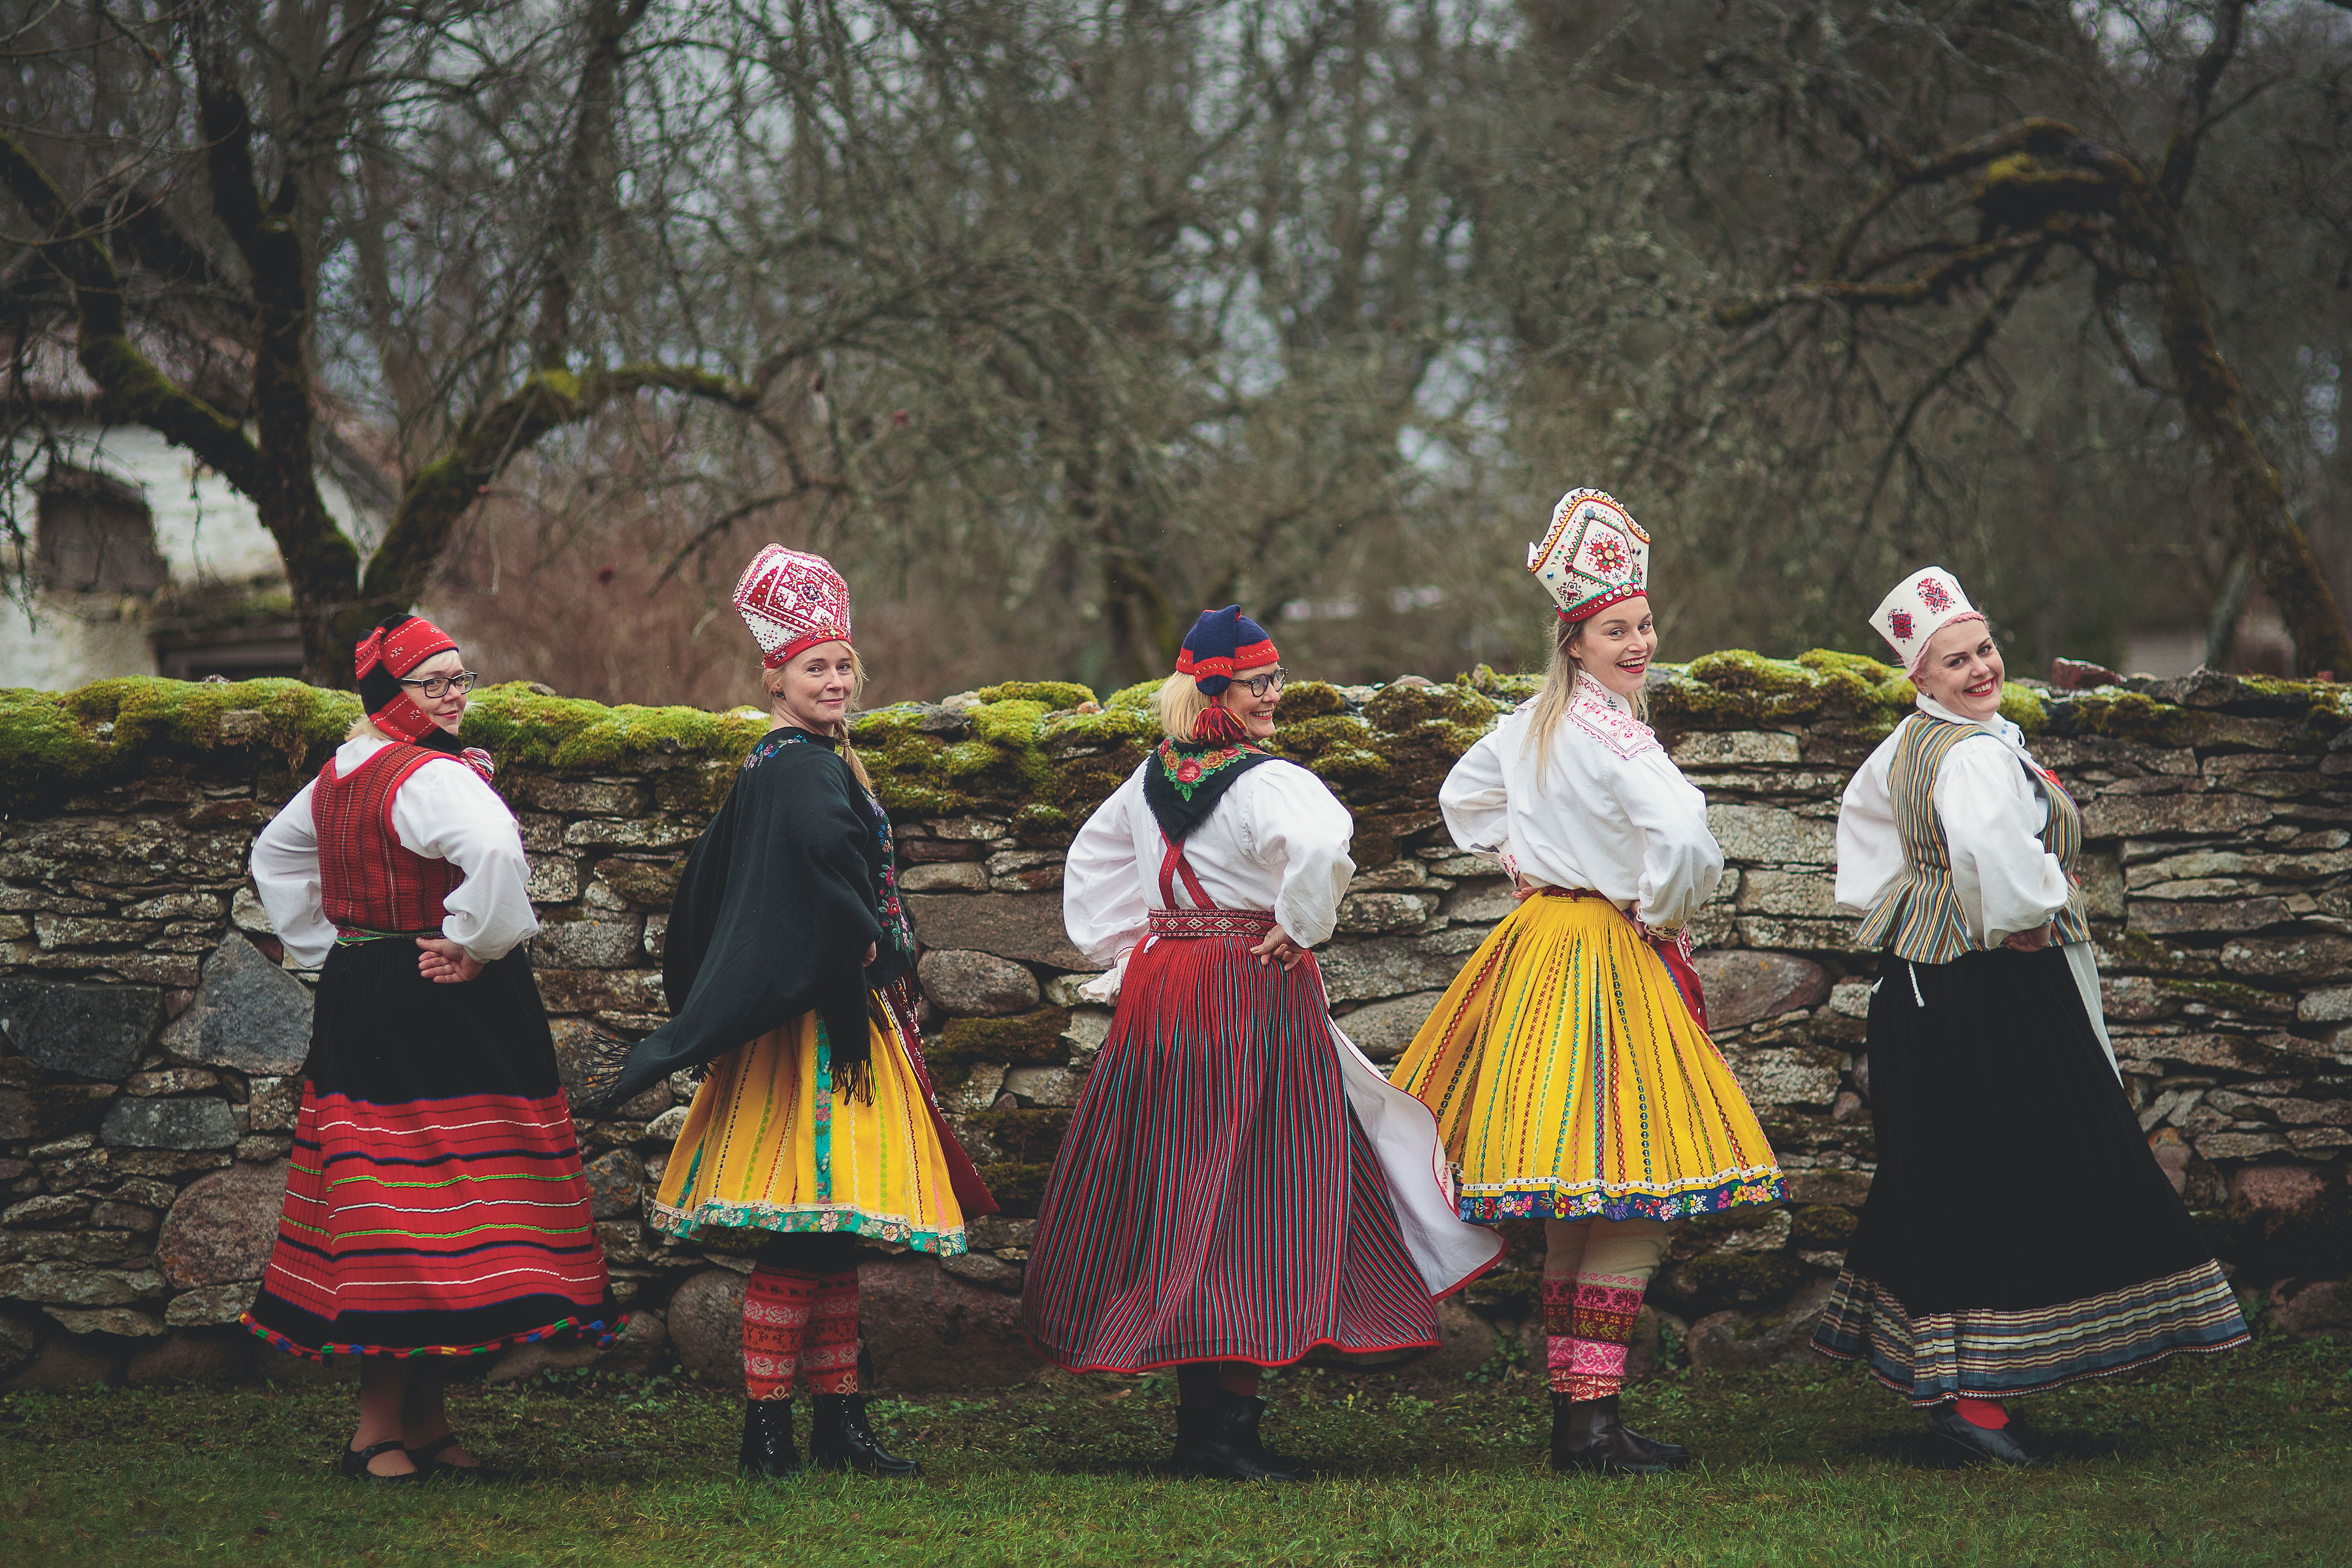 Saaremaa and Muhu folk costumes